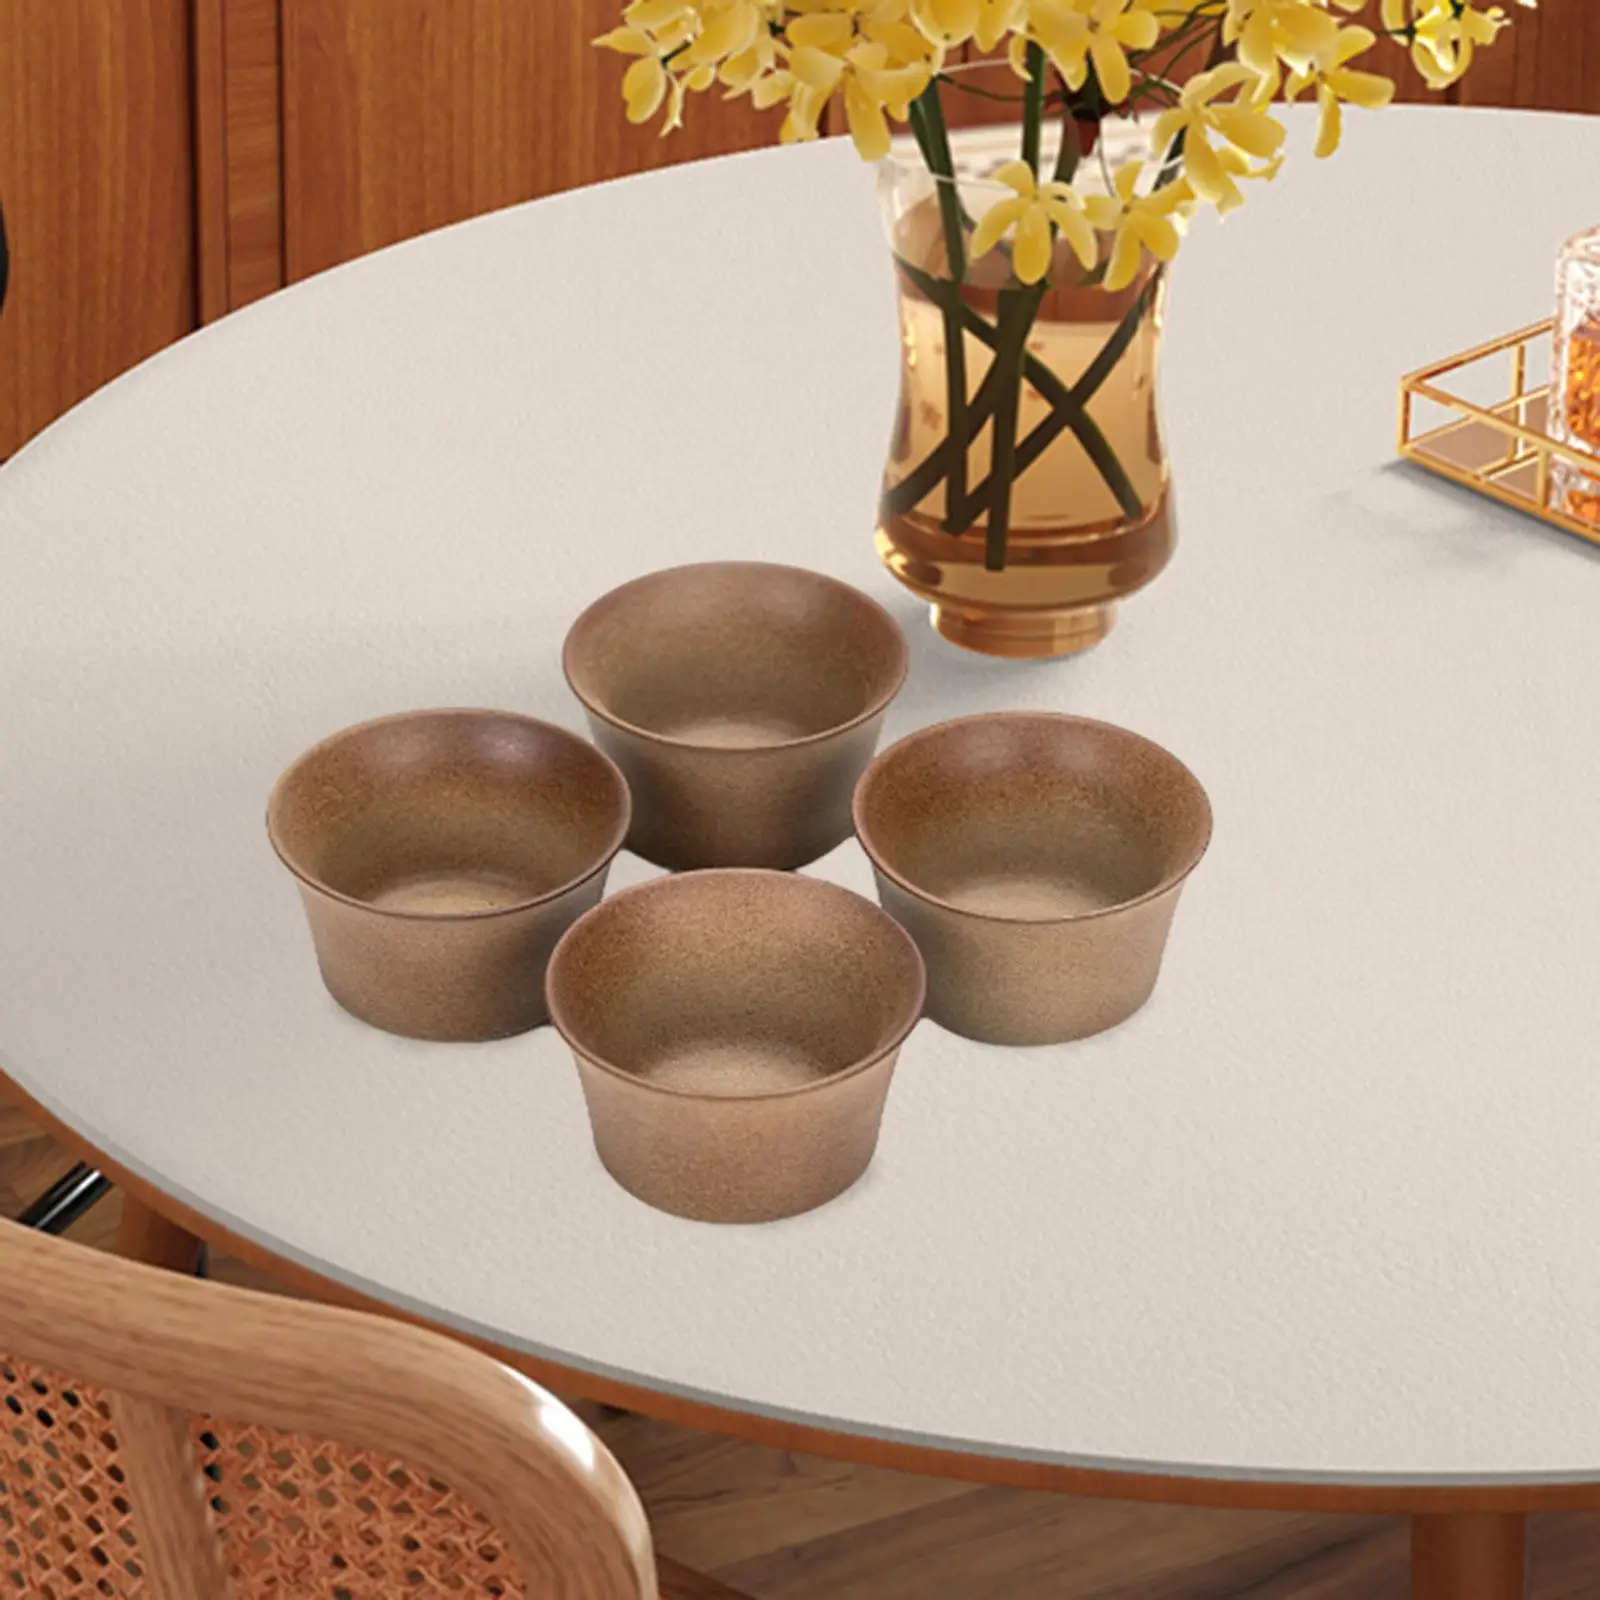 4 Pieces Japanese Tea Cups Set Traditional Tea Mug without Handles Kung Fu Tea Cup for Latte Hotel Cafe Matcha Tea Cappuccino